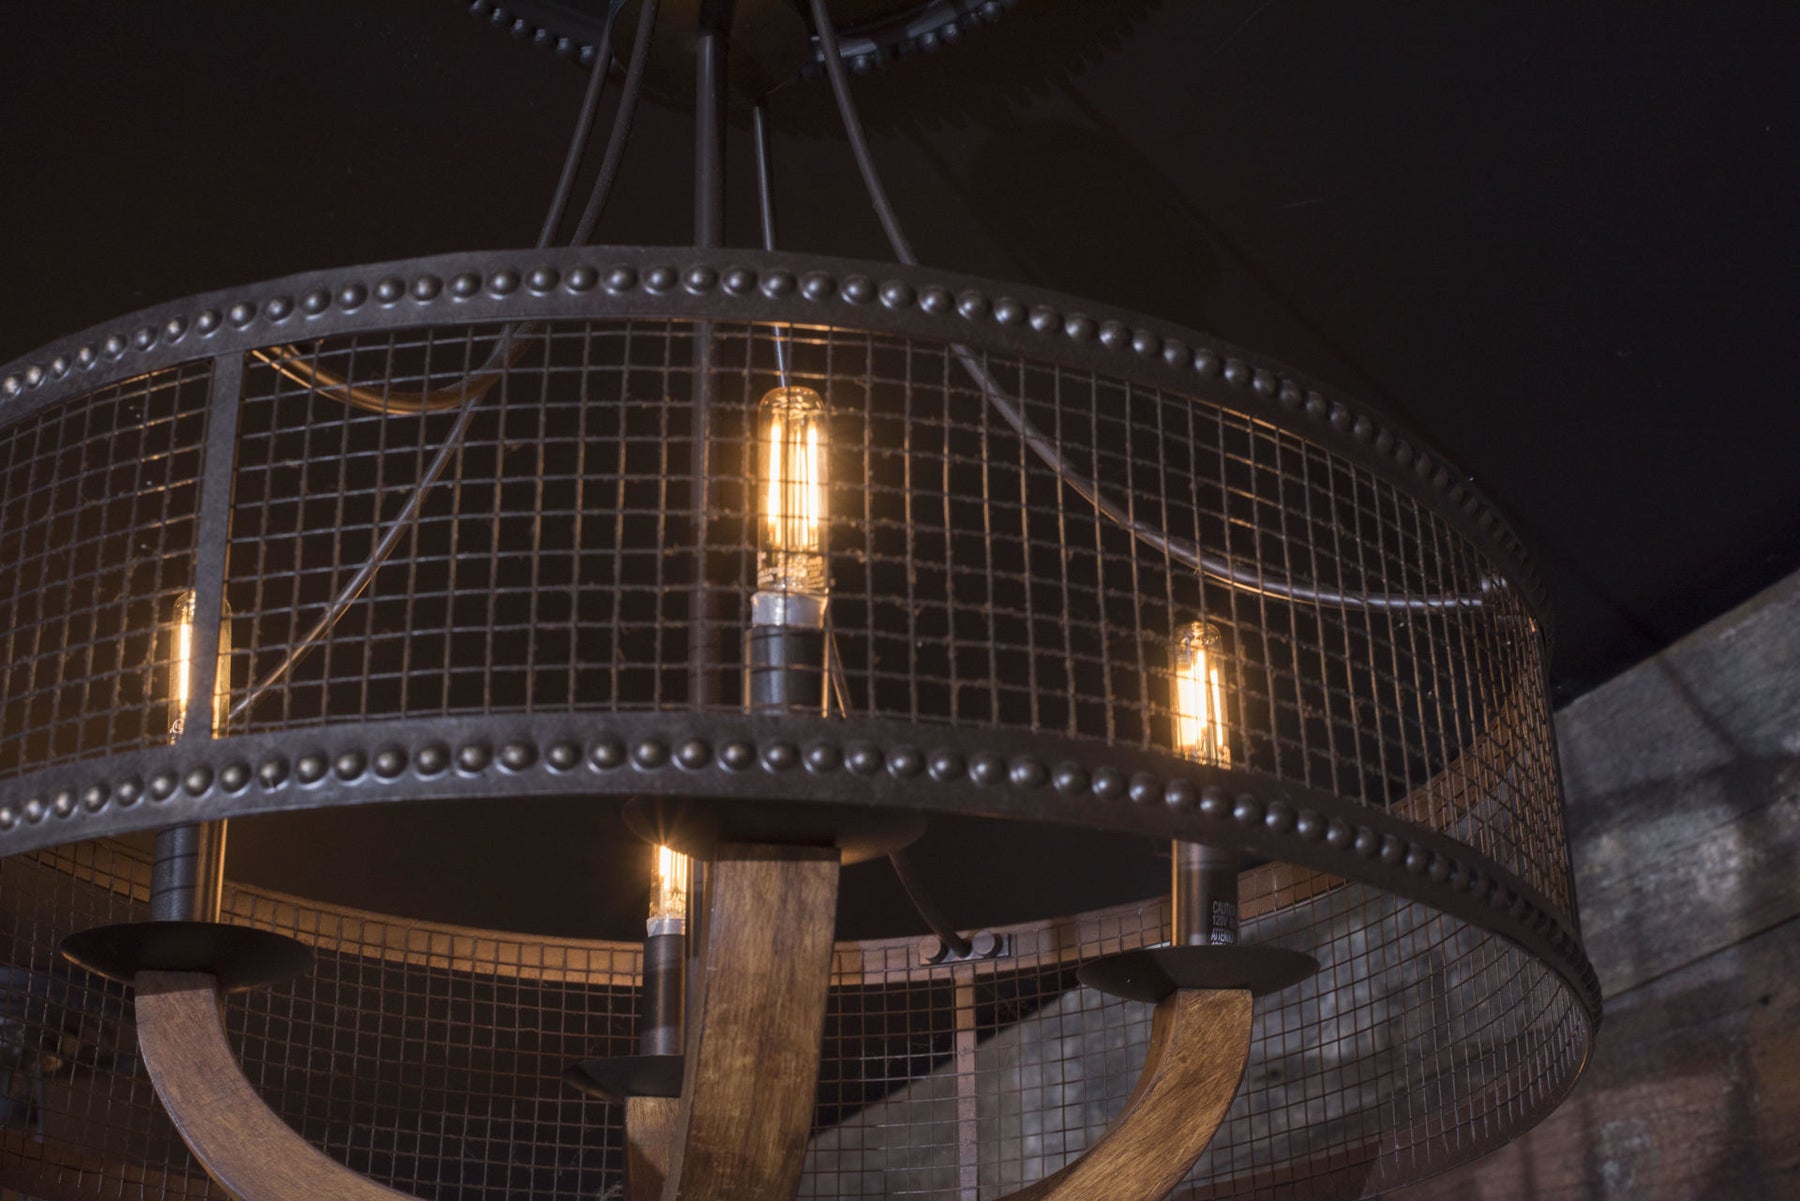 tubular kibun lighting in a wire frame chandelier